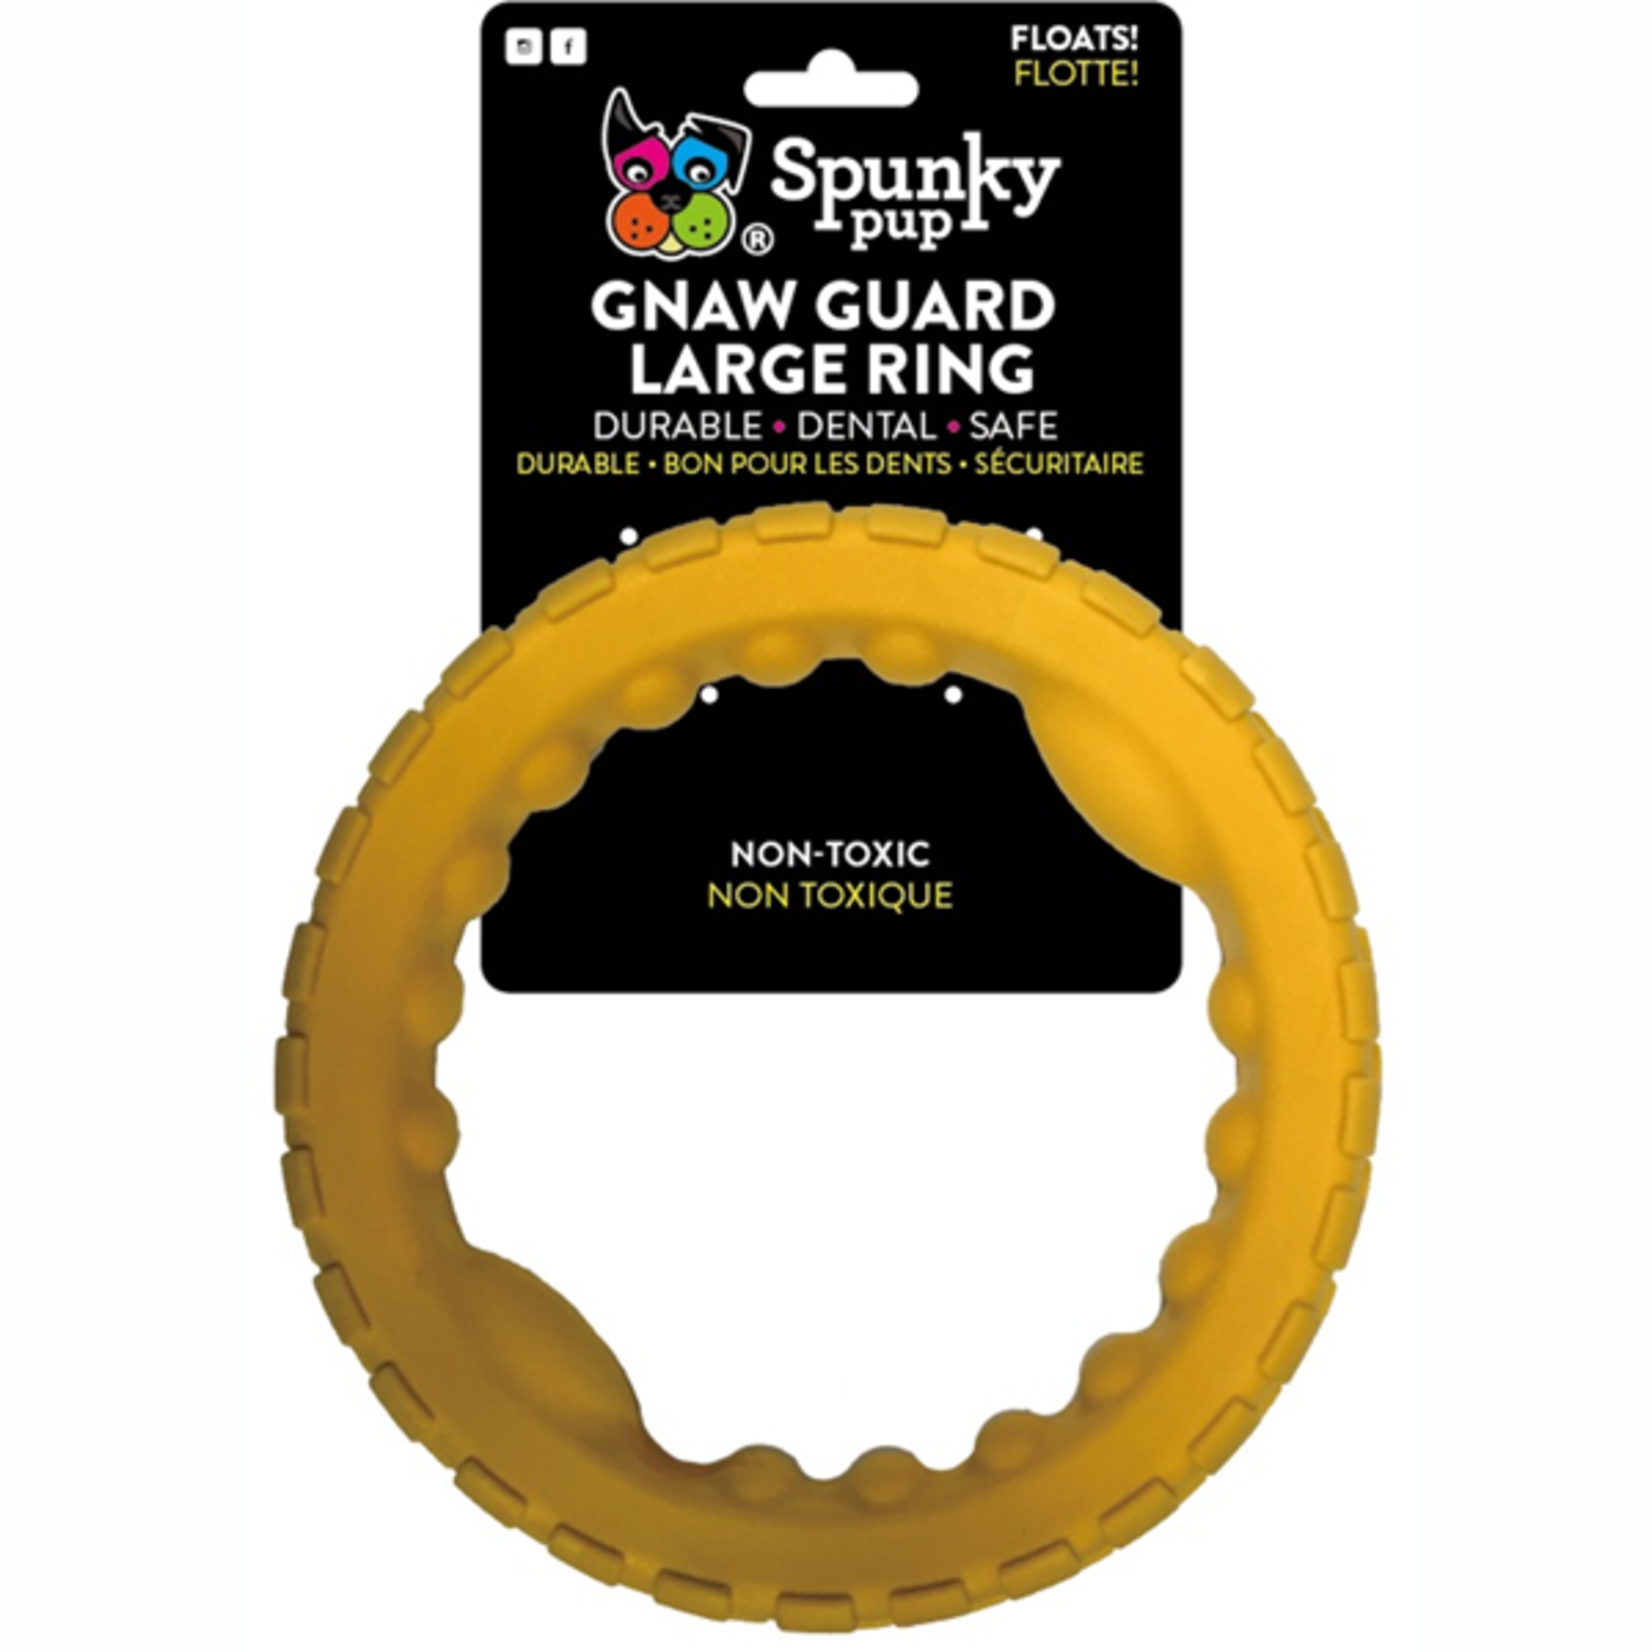 Spunky Pup Spunky Pup Gnaw Guard Ring LG